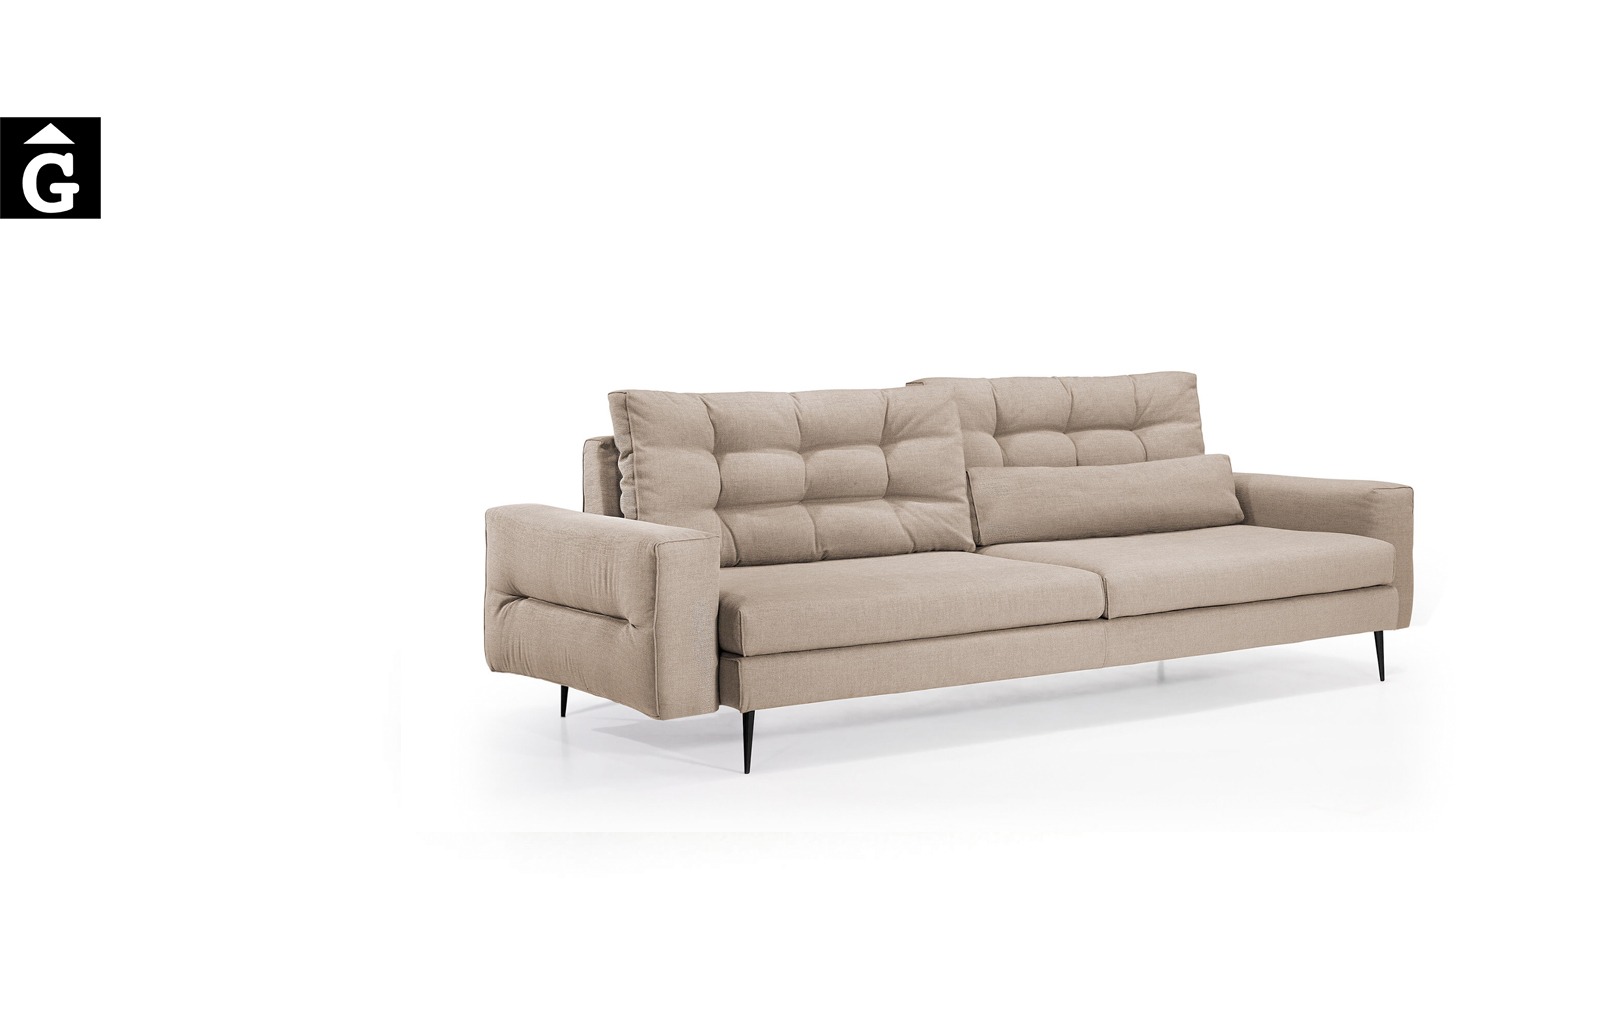 Sofà Dao de Moradillo by mobles Gifreu tapisseria de qualitat sofas relax llits puff pouf chaixelongues butaques sillons